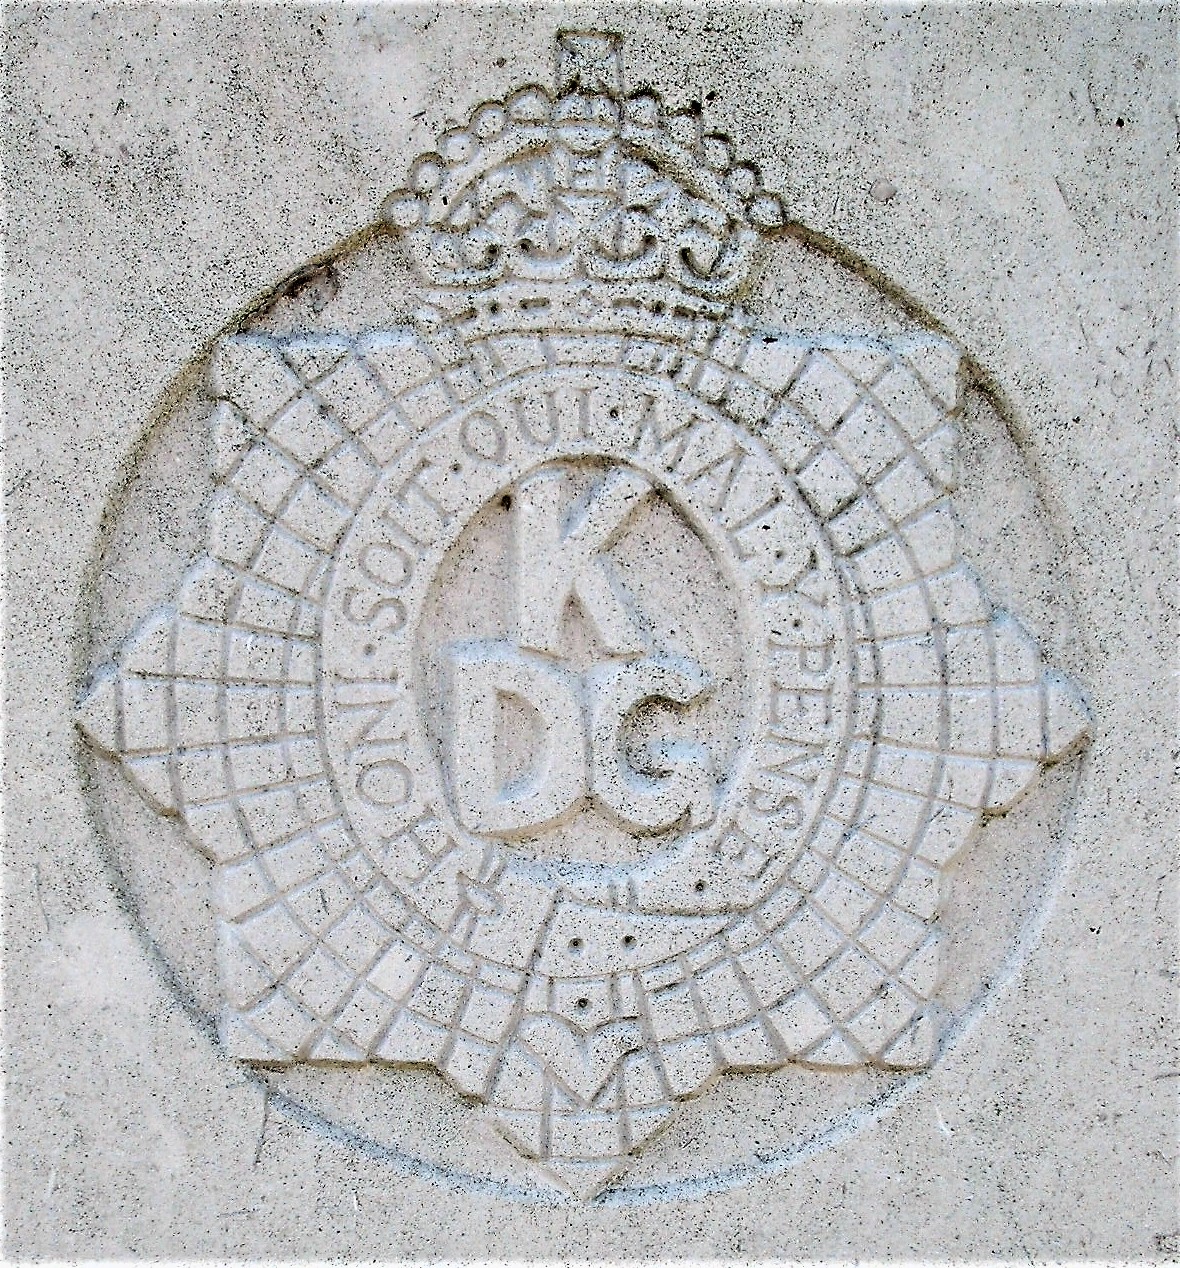 Cap badge of the Kings Dragoon Guards